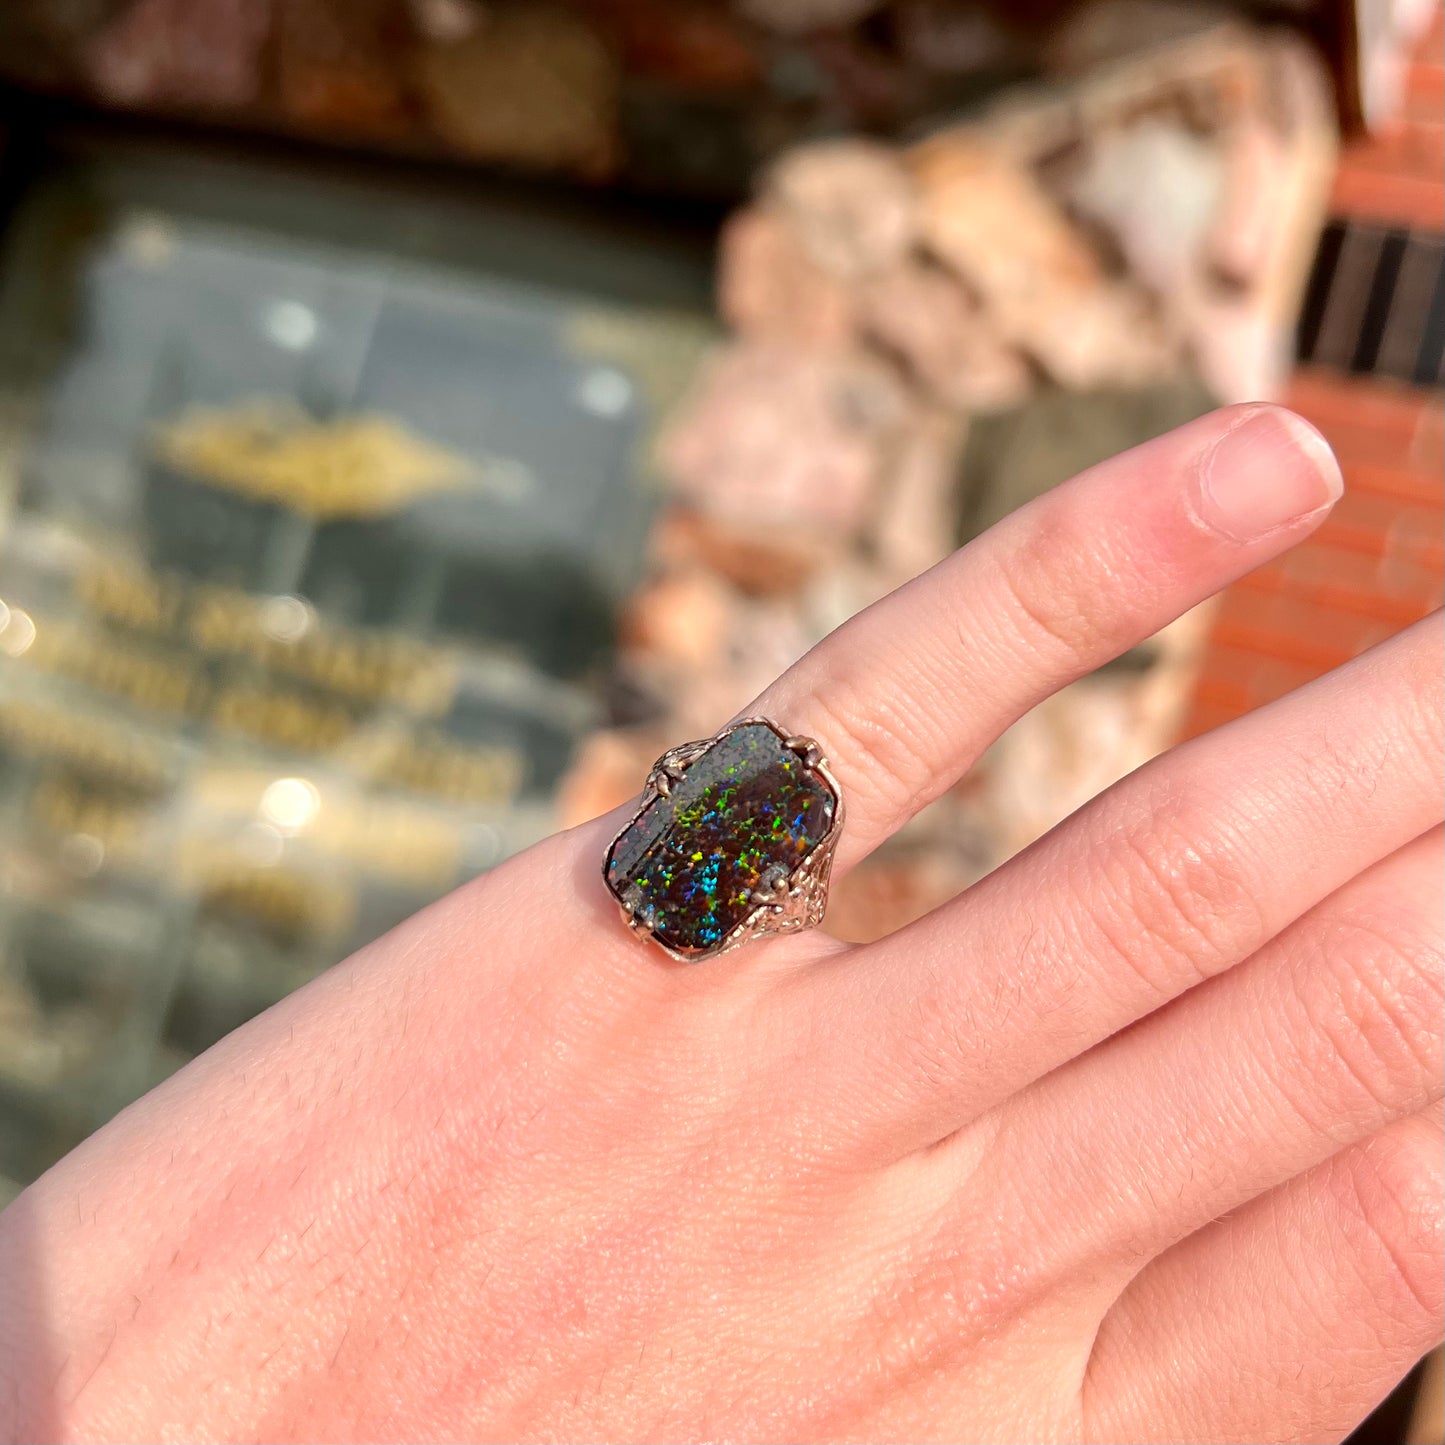 A vintage, white gold filigree unisex ring set with a black Koroit boulder opal.